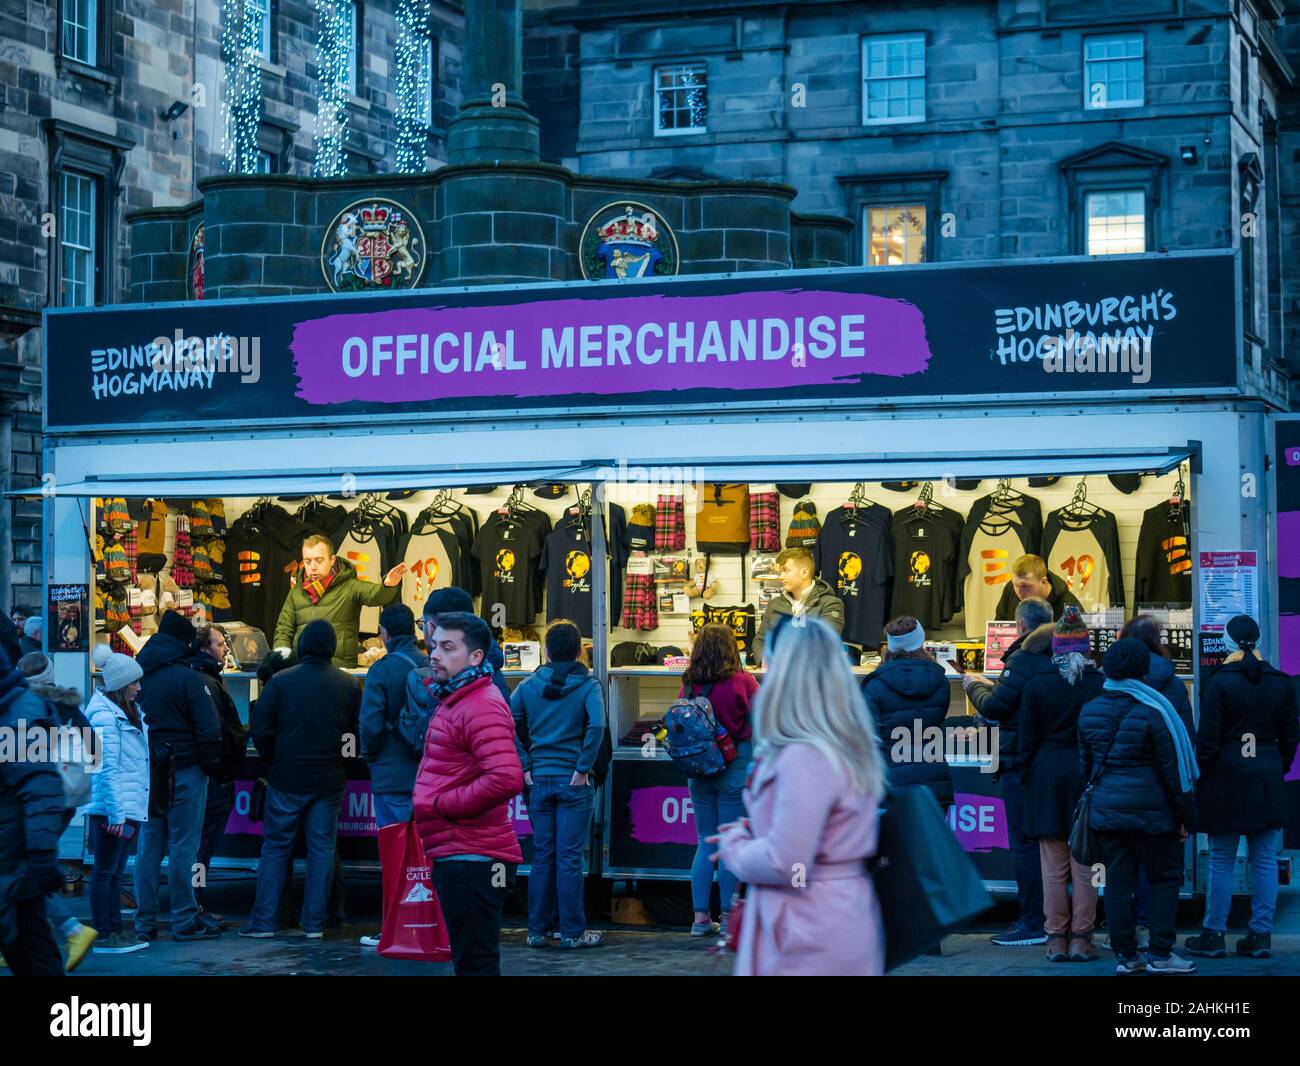 People buying merchandise for Edinburgh Hogmanay at street stall selling official goods, Royal Mile, Edinburgh, Scotland, UK Stock Photo